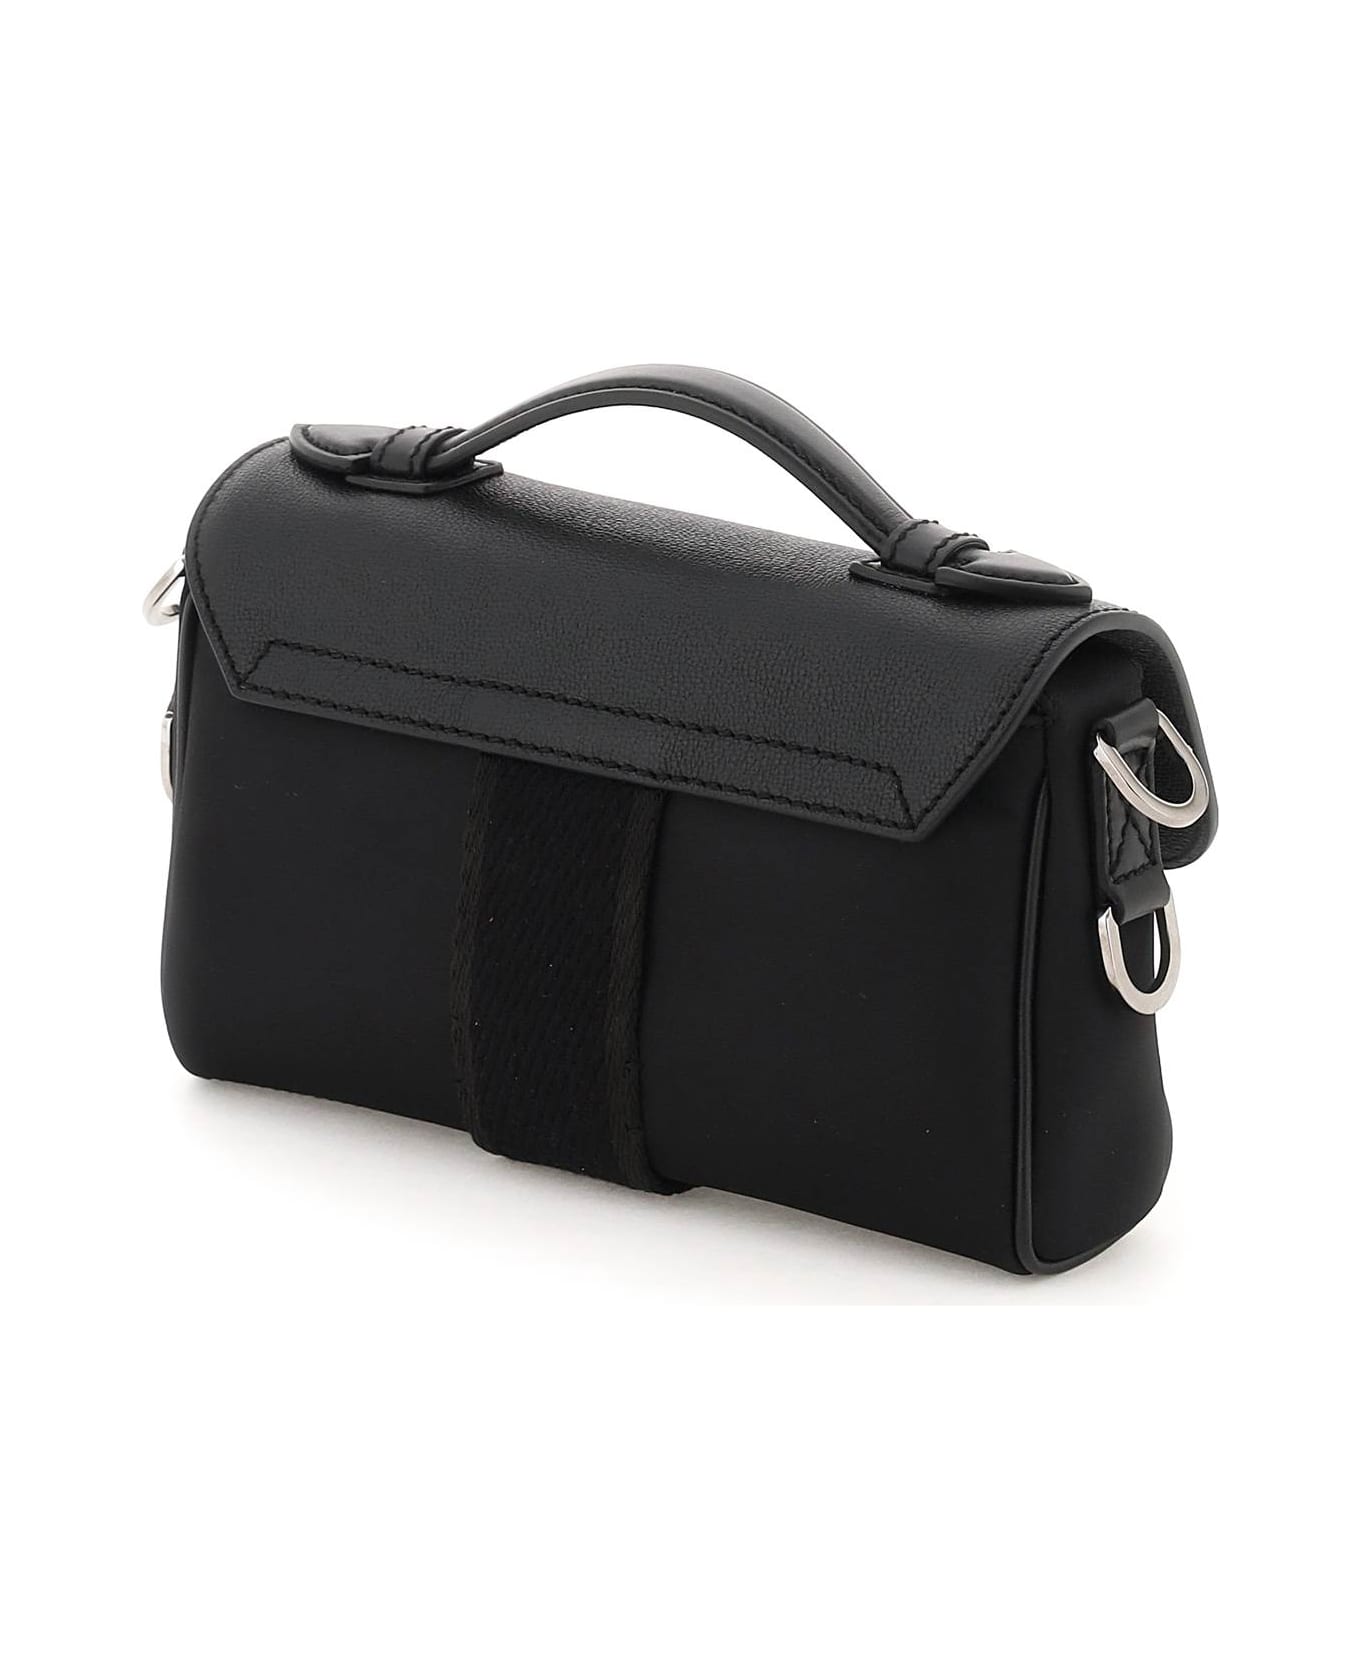 Dolce & Gabbana Handbag - NERO NERO (Black) トートバッグ